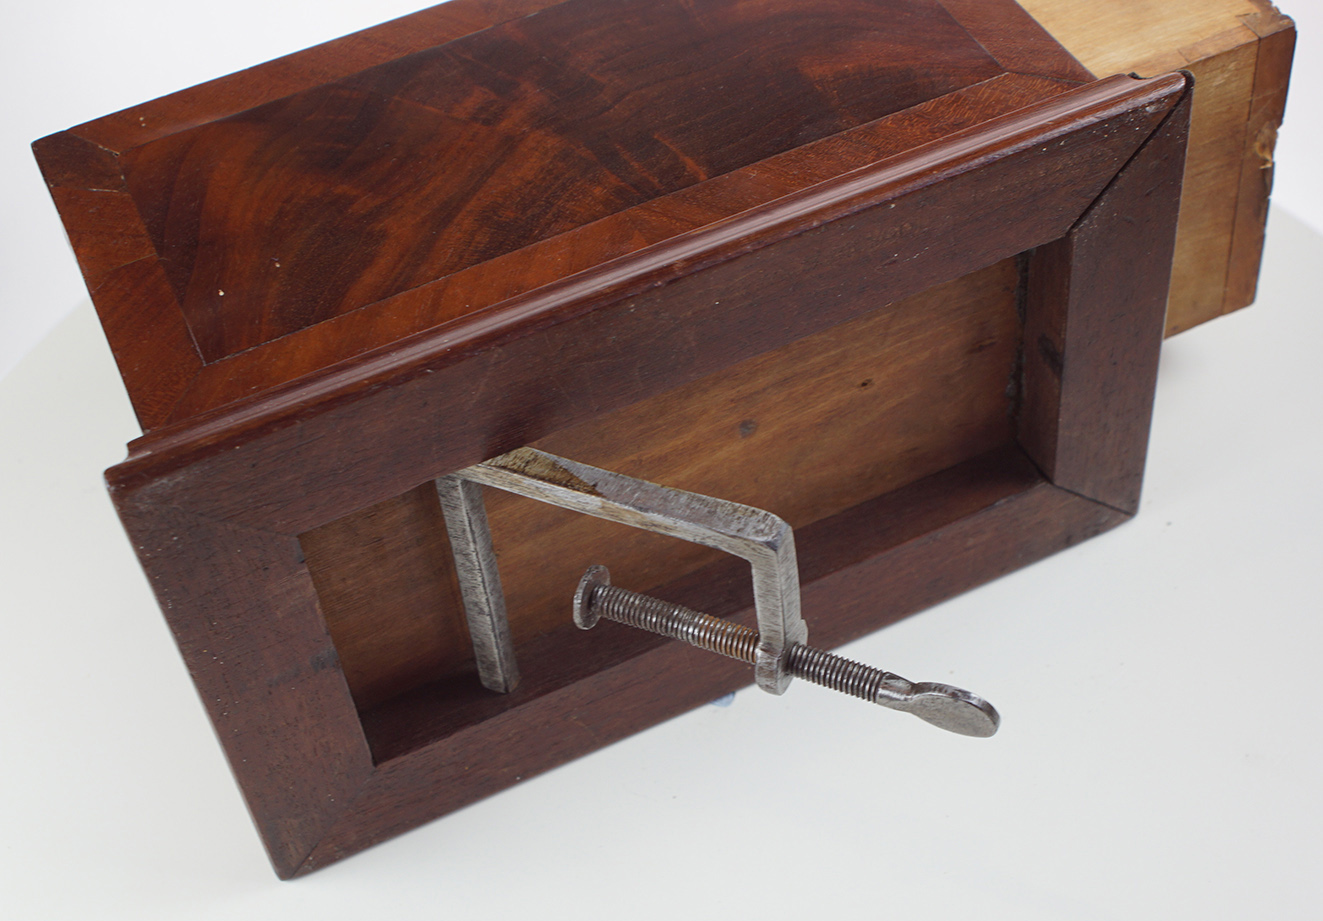 Rosewood veneered table pincushion - Image 2 of 2